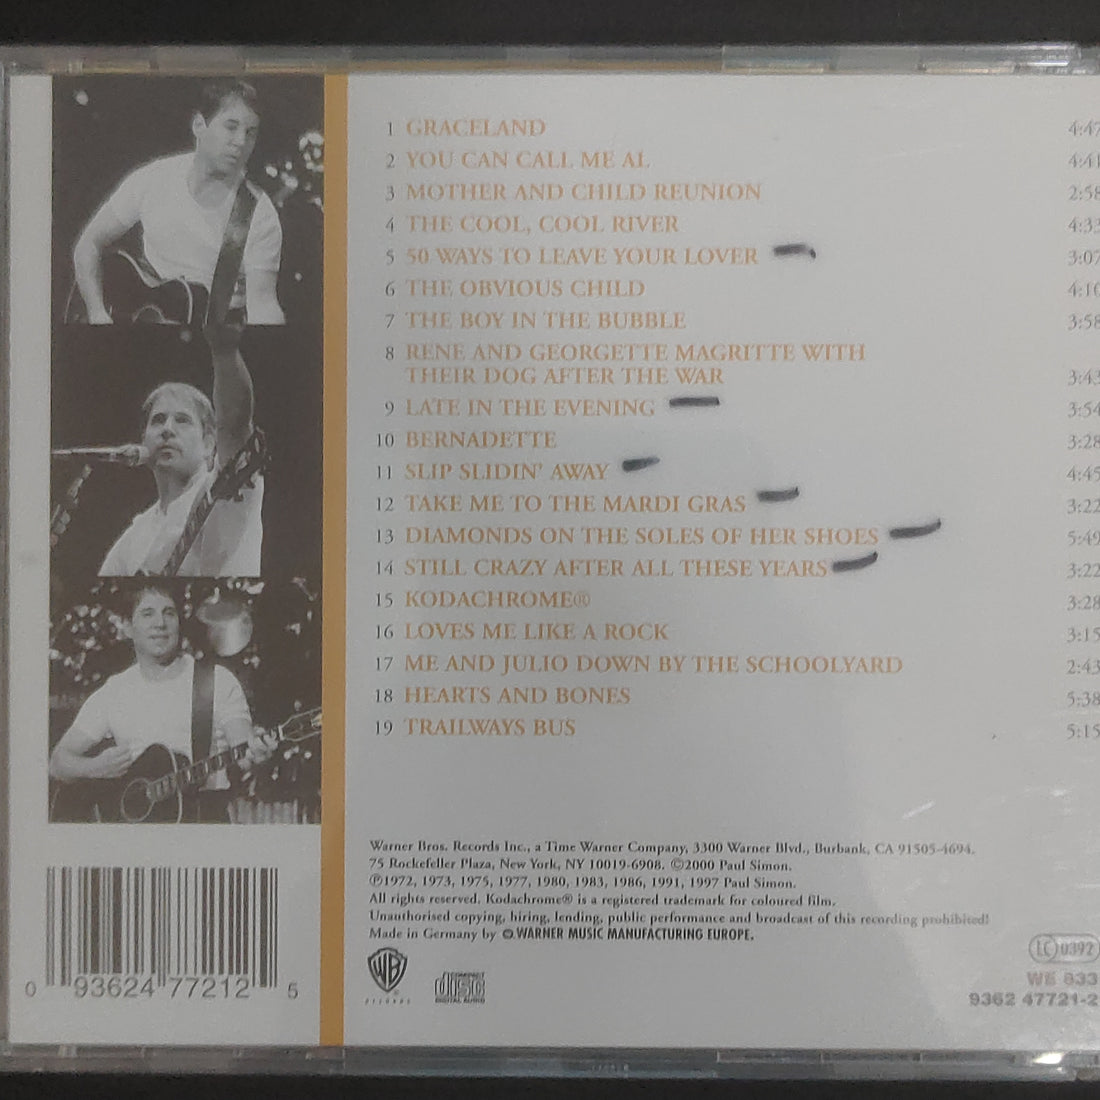 Paul Simon - Greatest Hits - Shining Like A National Guitar (CD) (VG+)